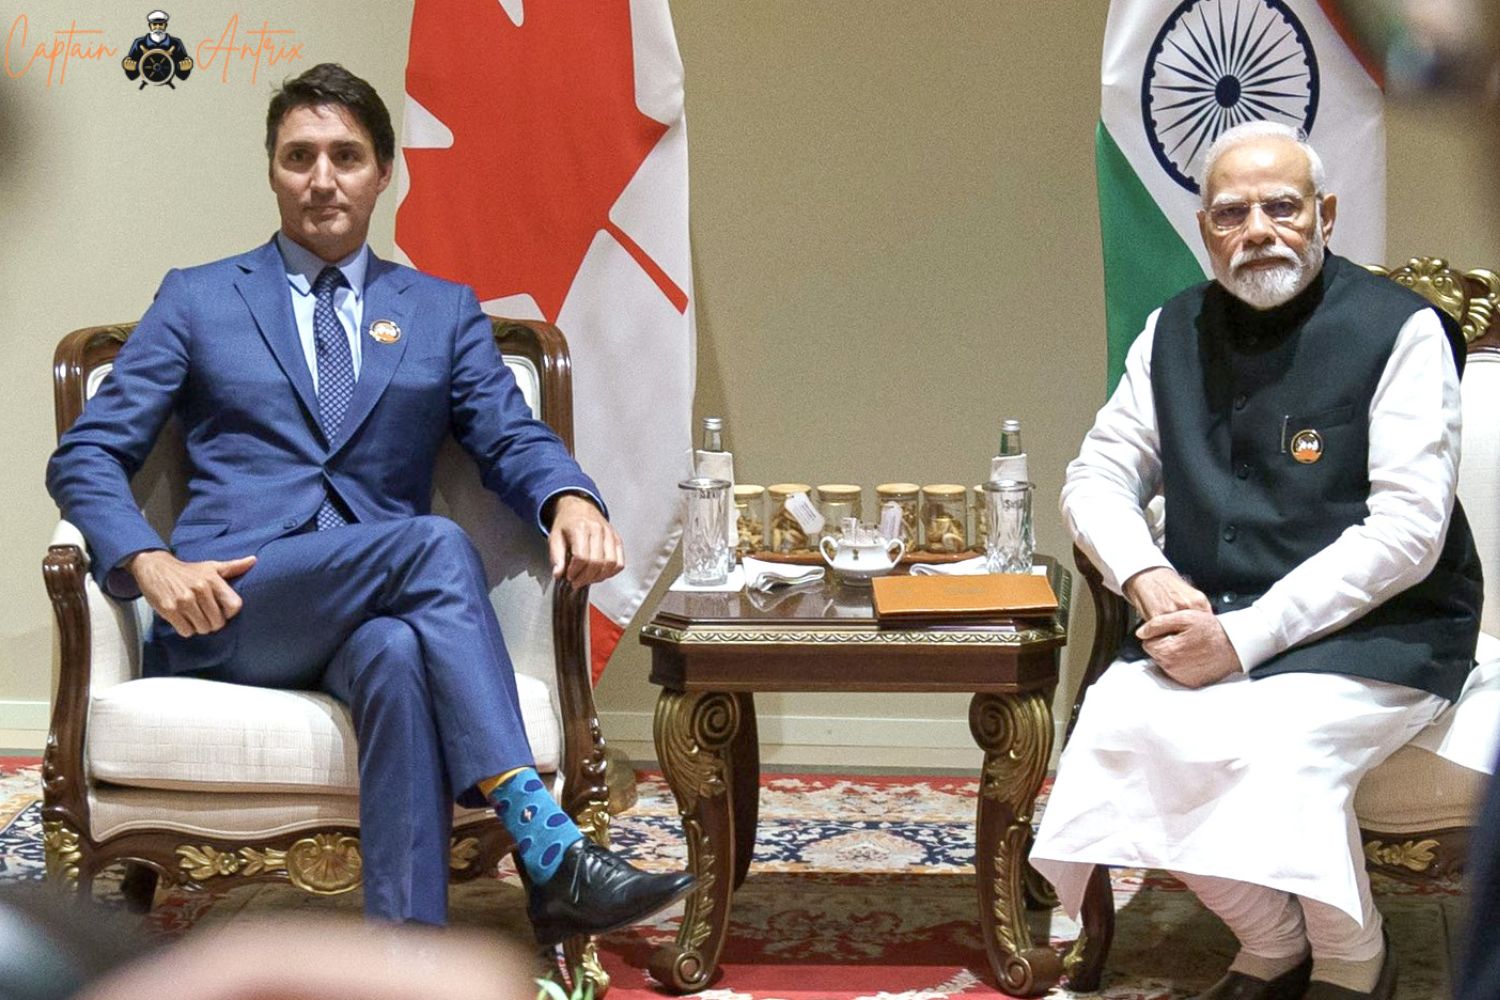 Urges Calm and Vigilance Among Hindu-Canadians